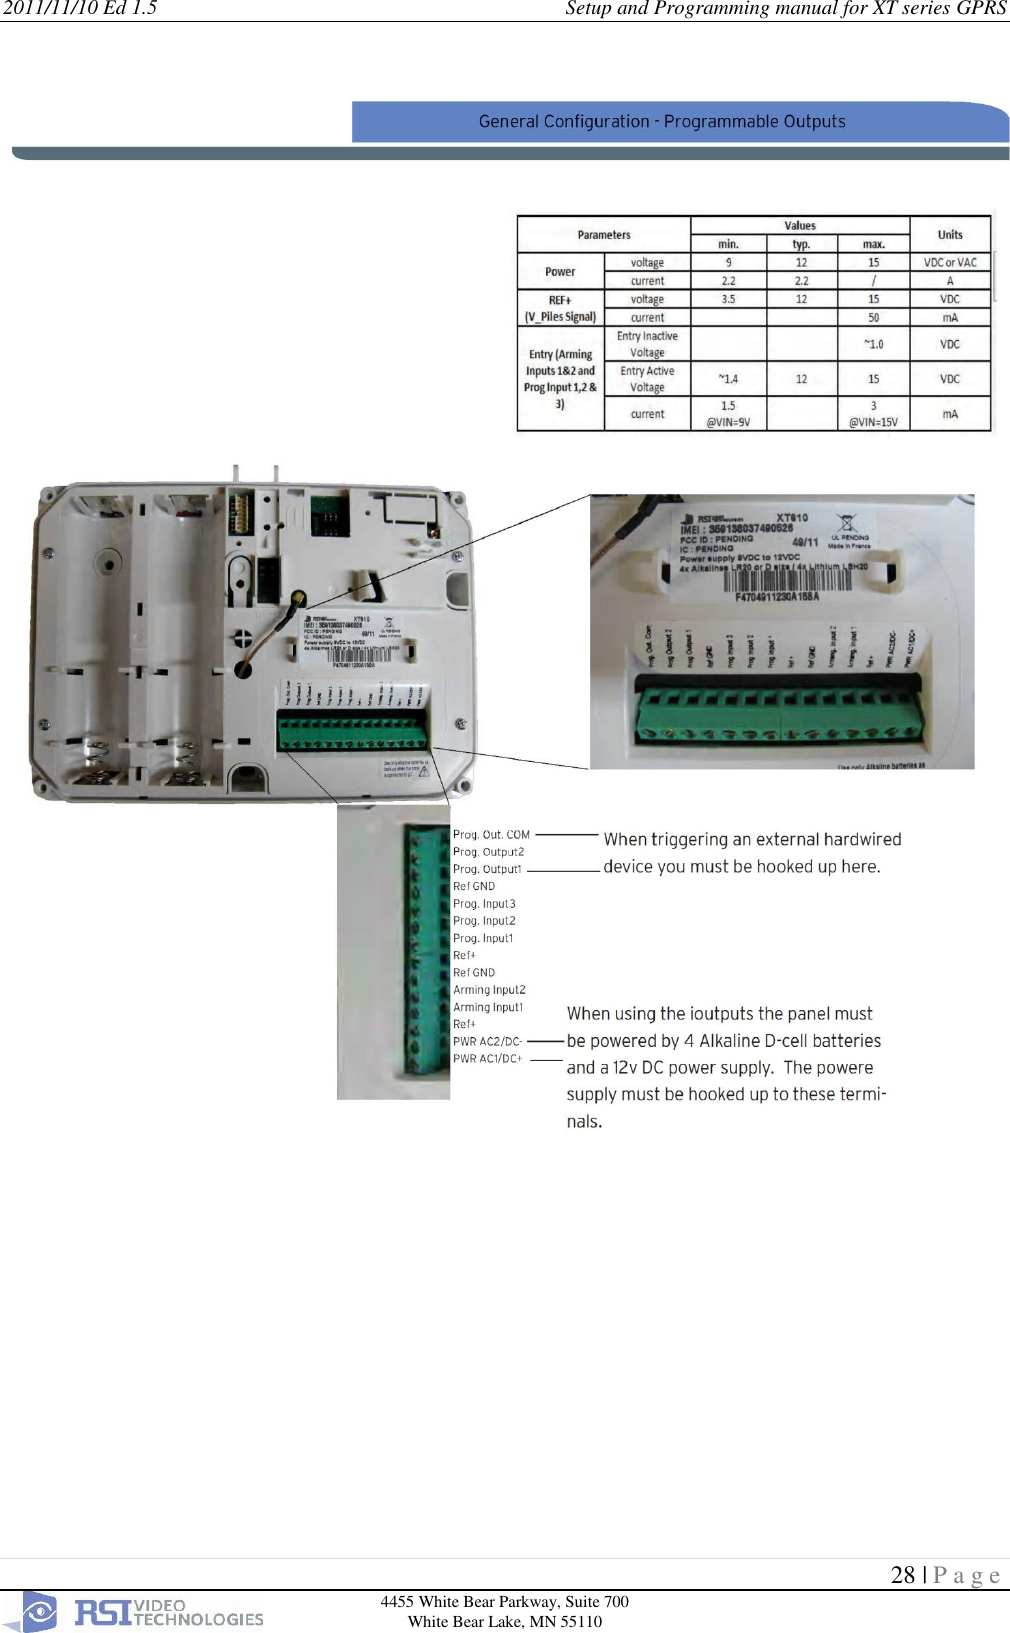 2011/11/10 Ed 1.5      Setup and Programming manual for XT series GPRS  28 | P a g e  4455 White Bear Parkway, Suite 700 White Bear Lake, MN 55110   